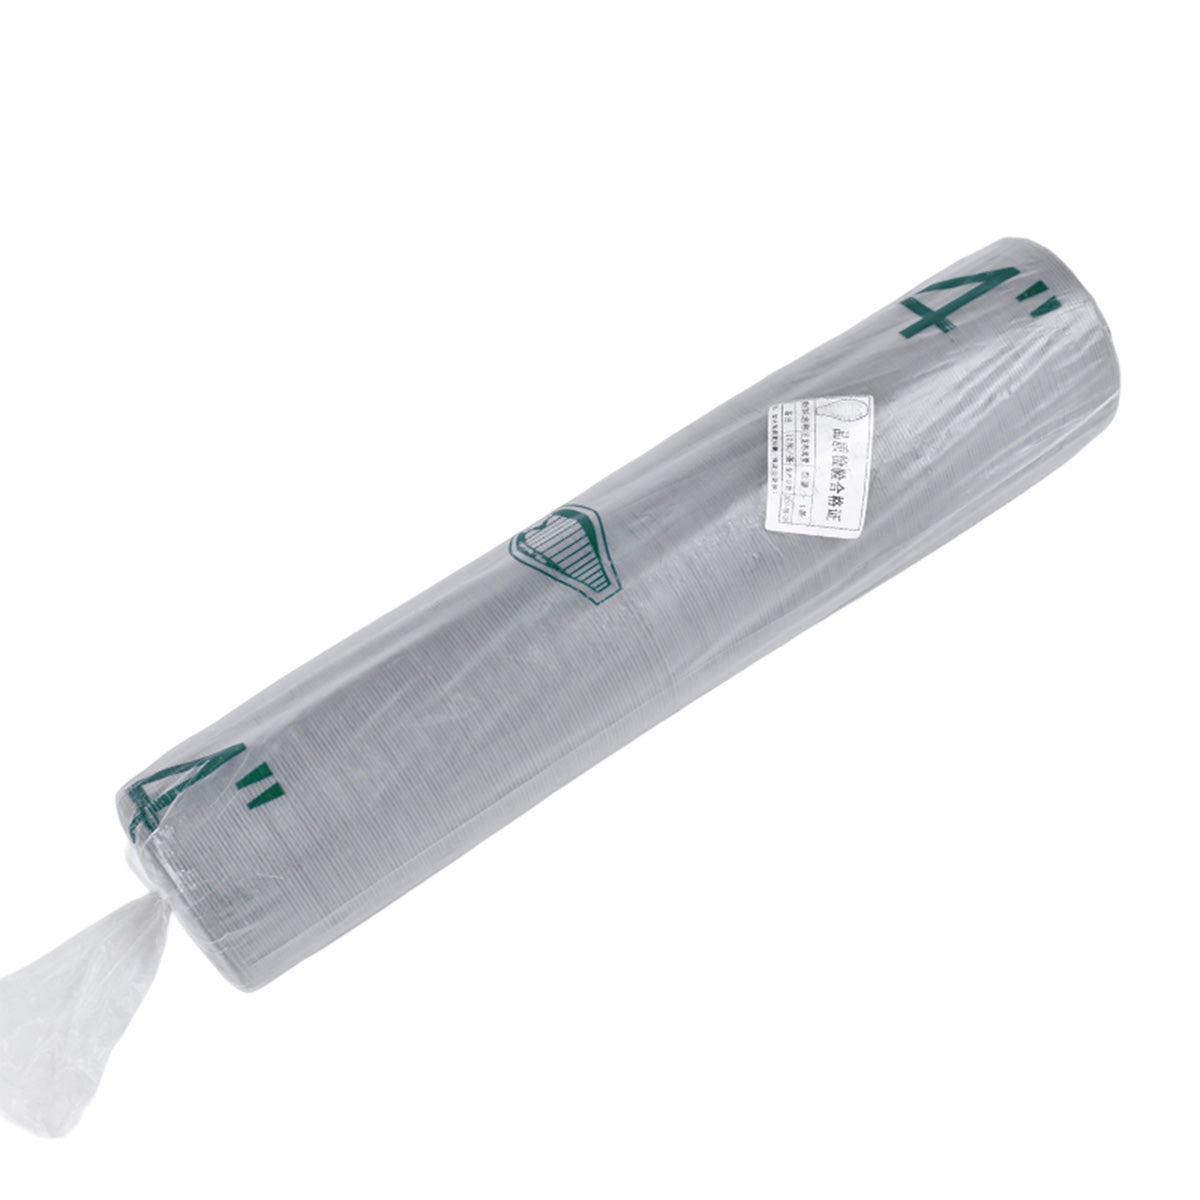 Startnow 3m/Lot 150mm Nylon Fabric Ventilation Pipe Ventilator Hose Plastic Canvas Flexible Telescopic Tube Intake Exhaust Duct